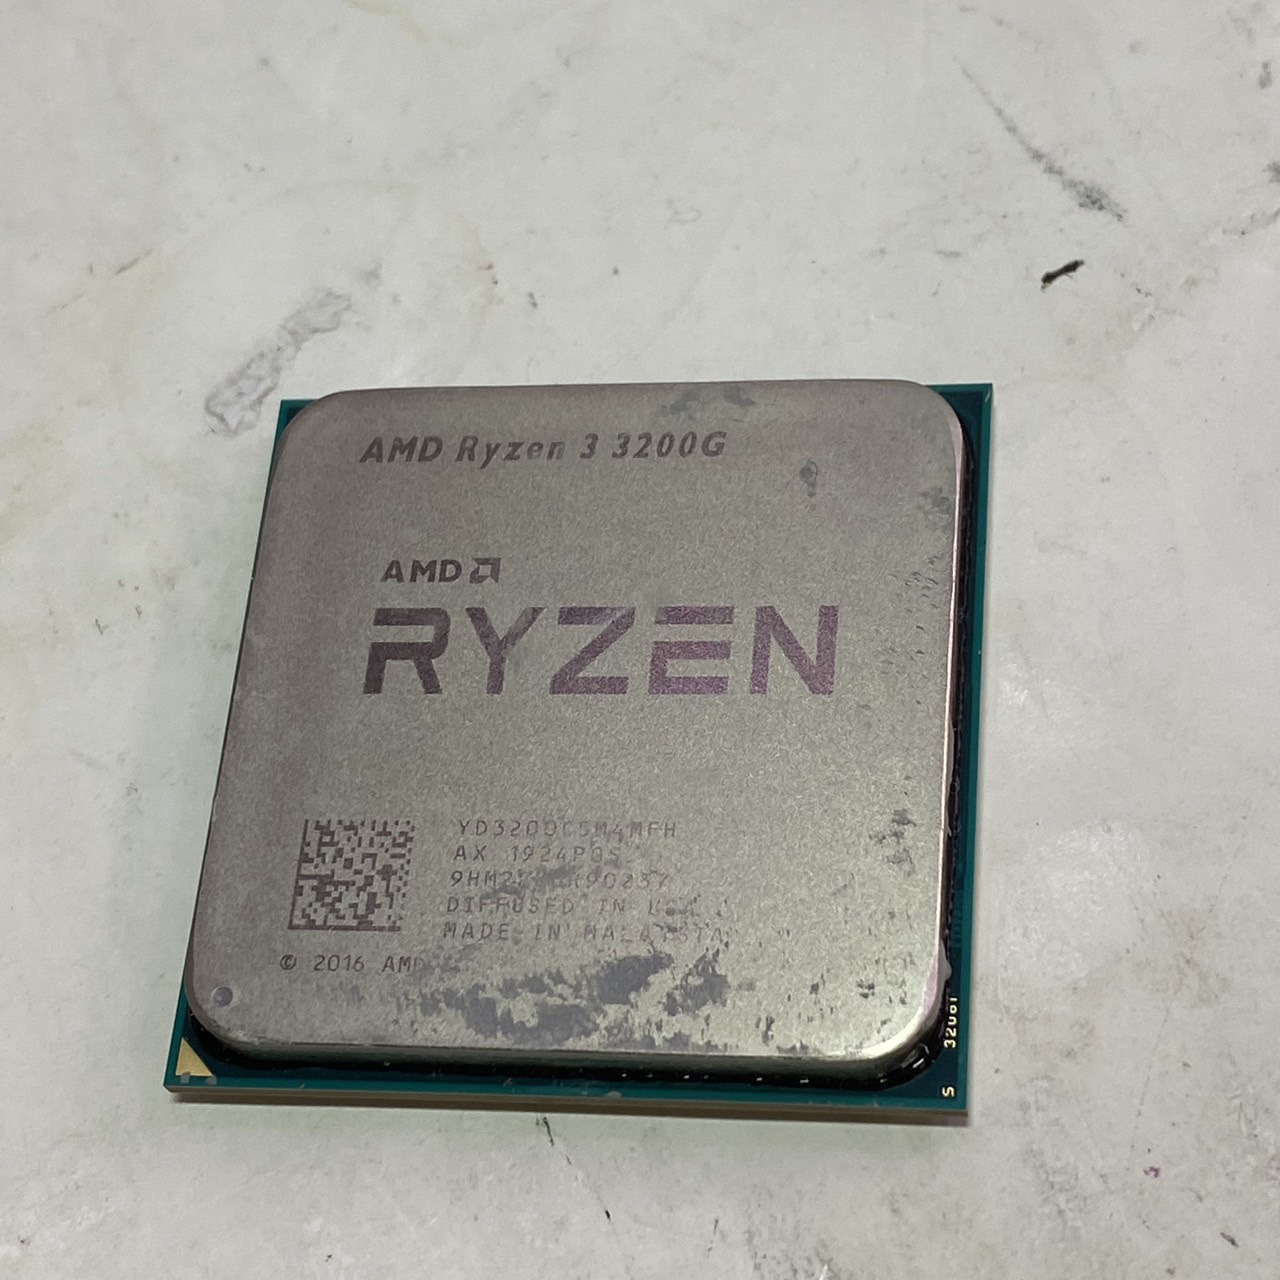 AMD(エーエムディー) Ryzen 3 3200G 3.60GHzの激安通販 - パソコン ...